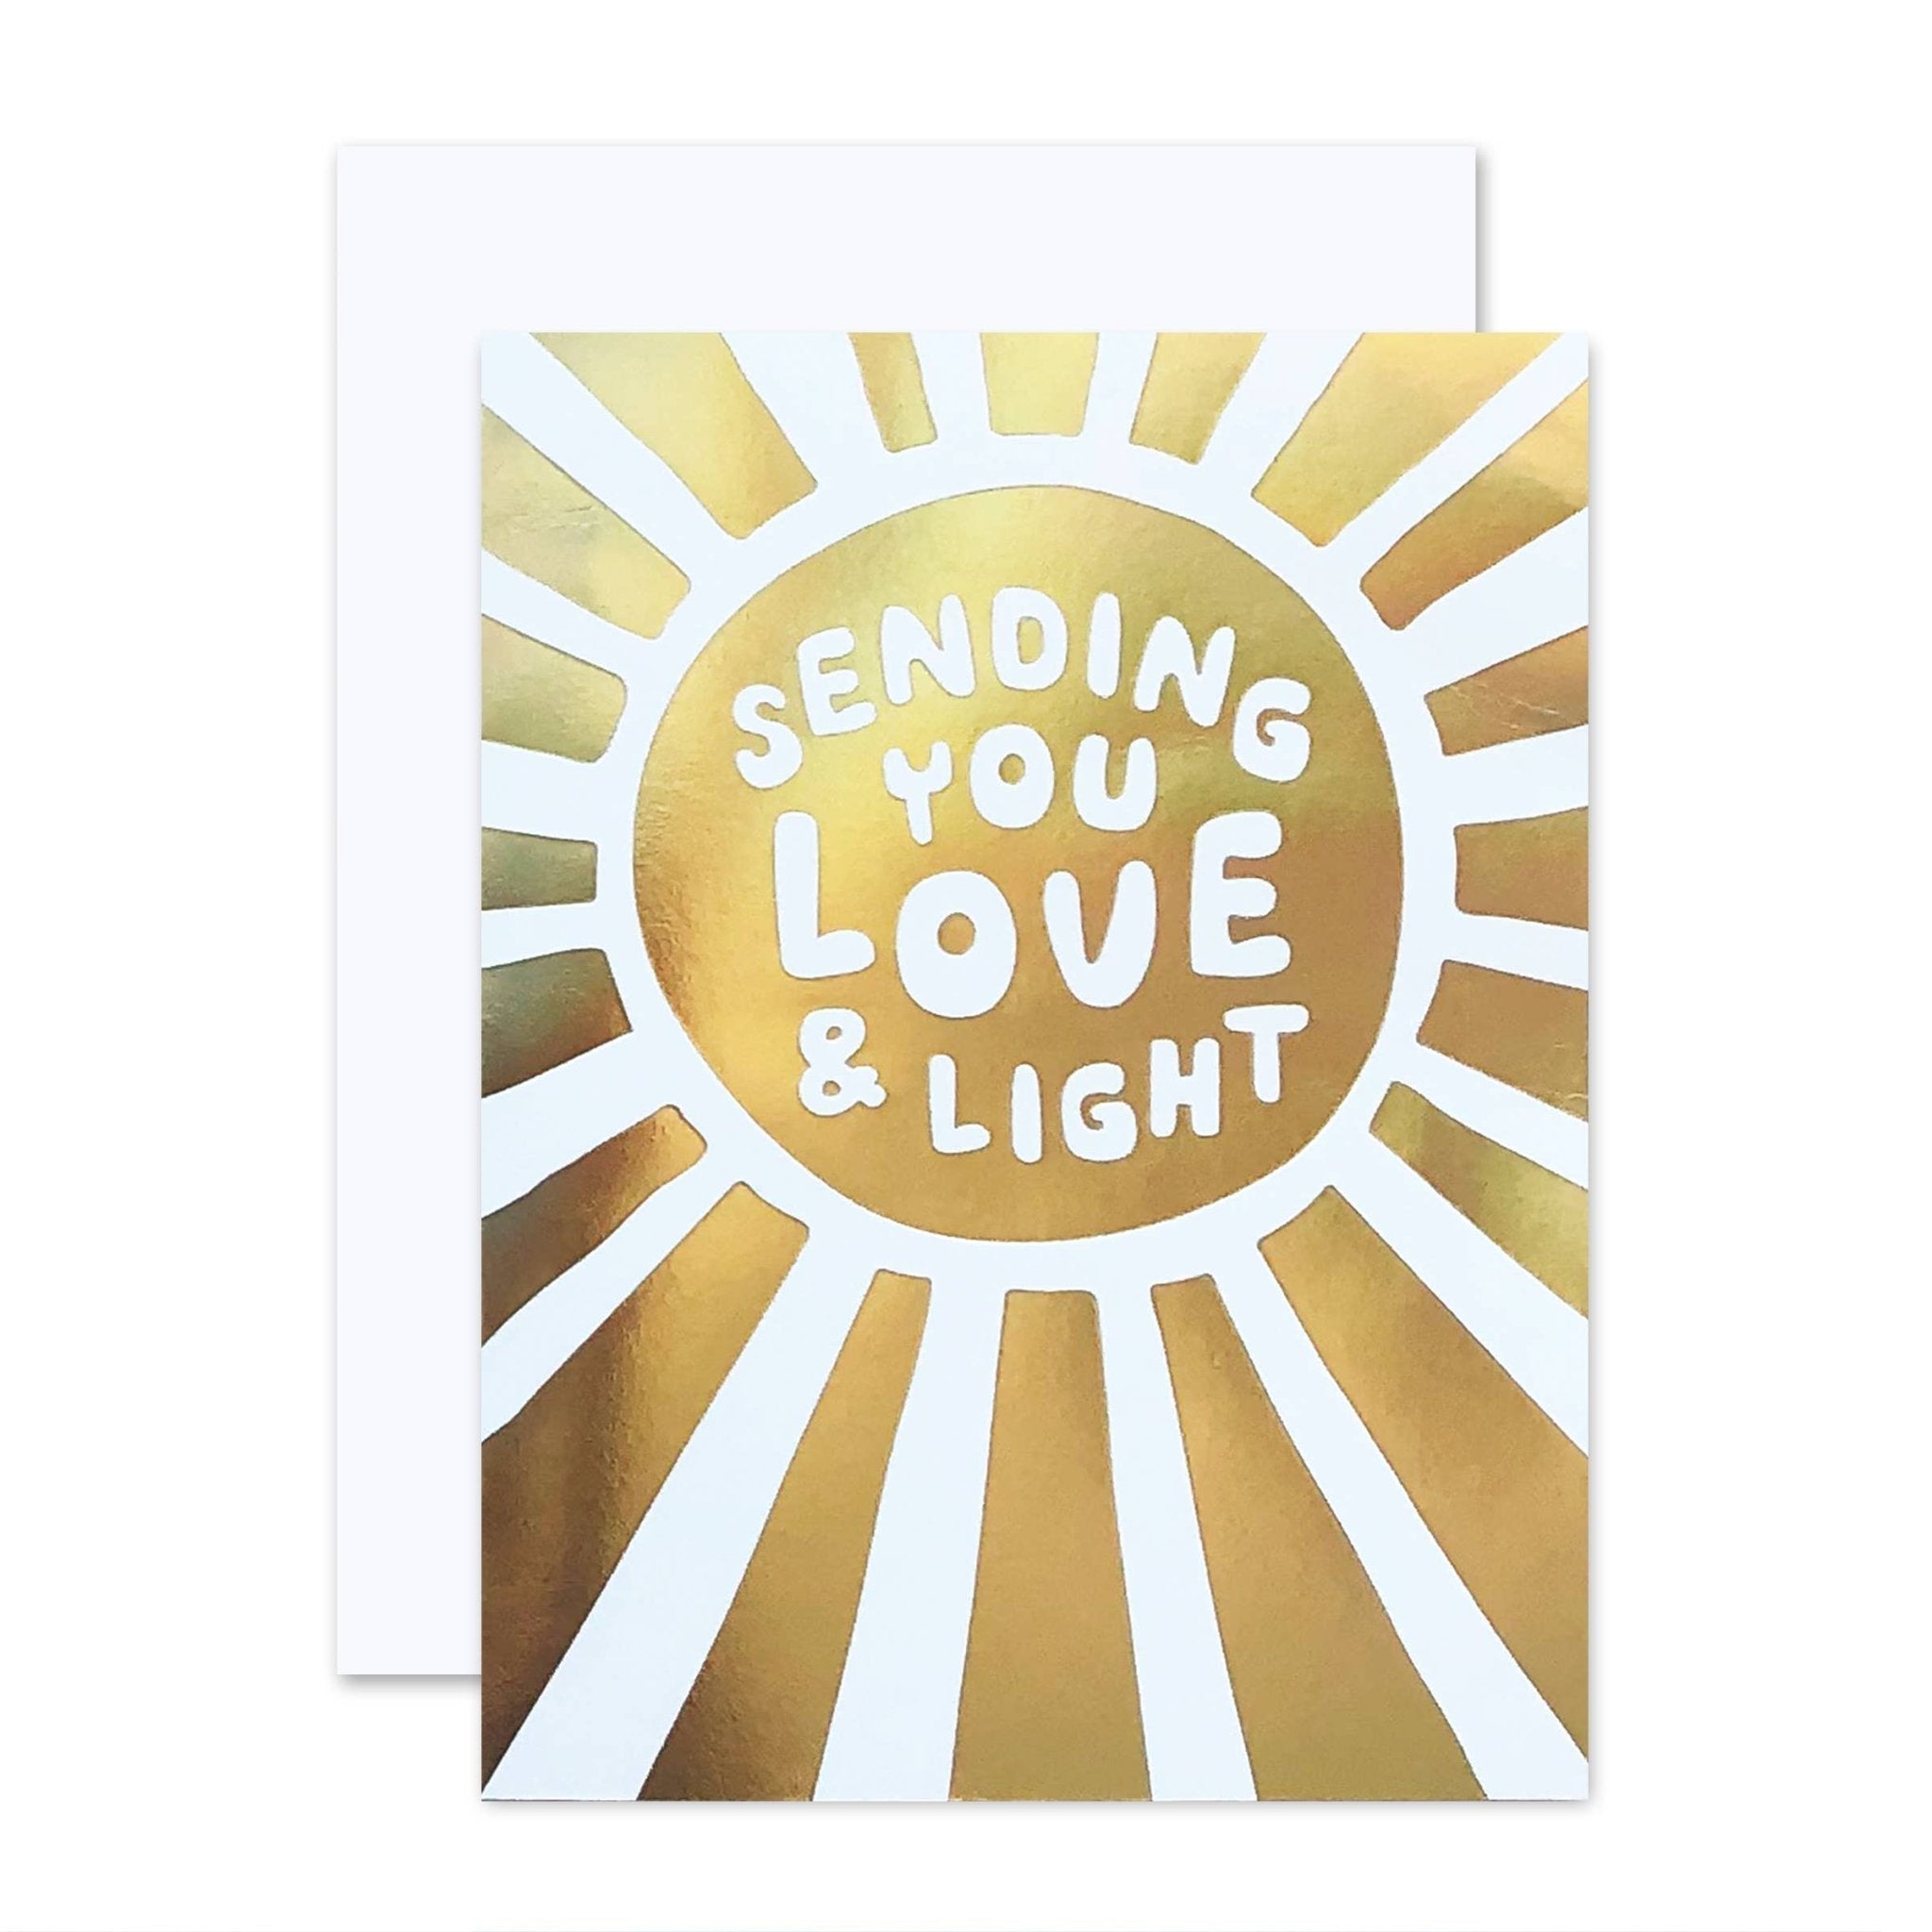 Love & Light Greeting Card - Spiral Circle